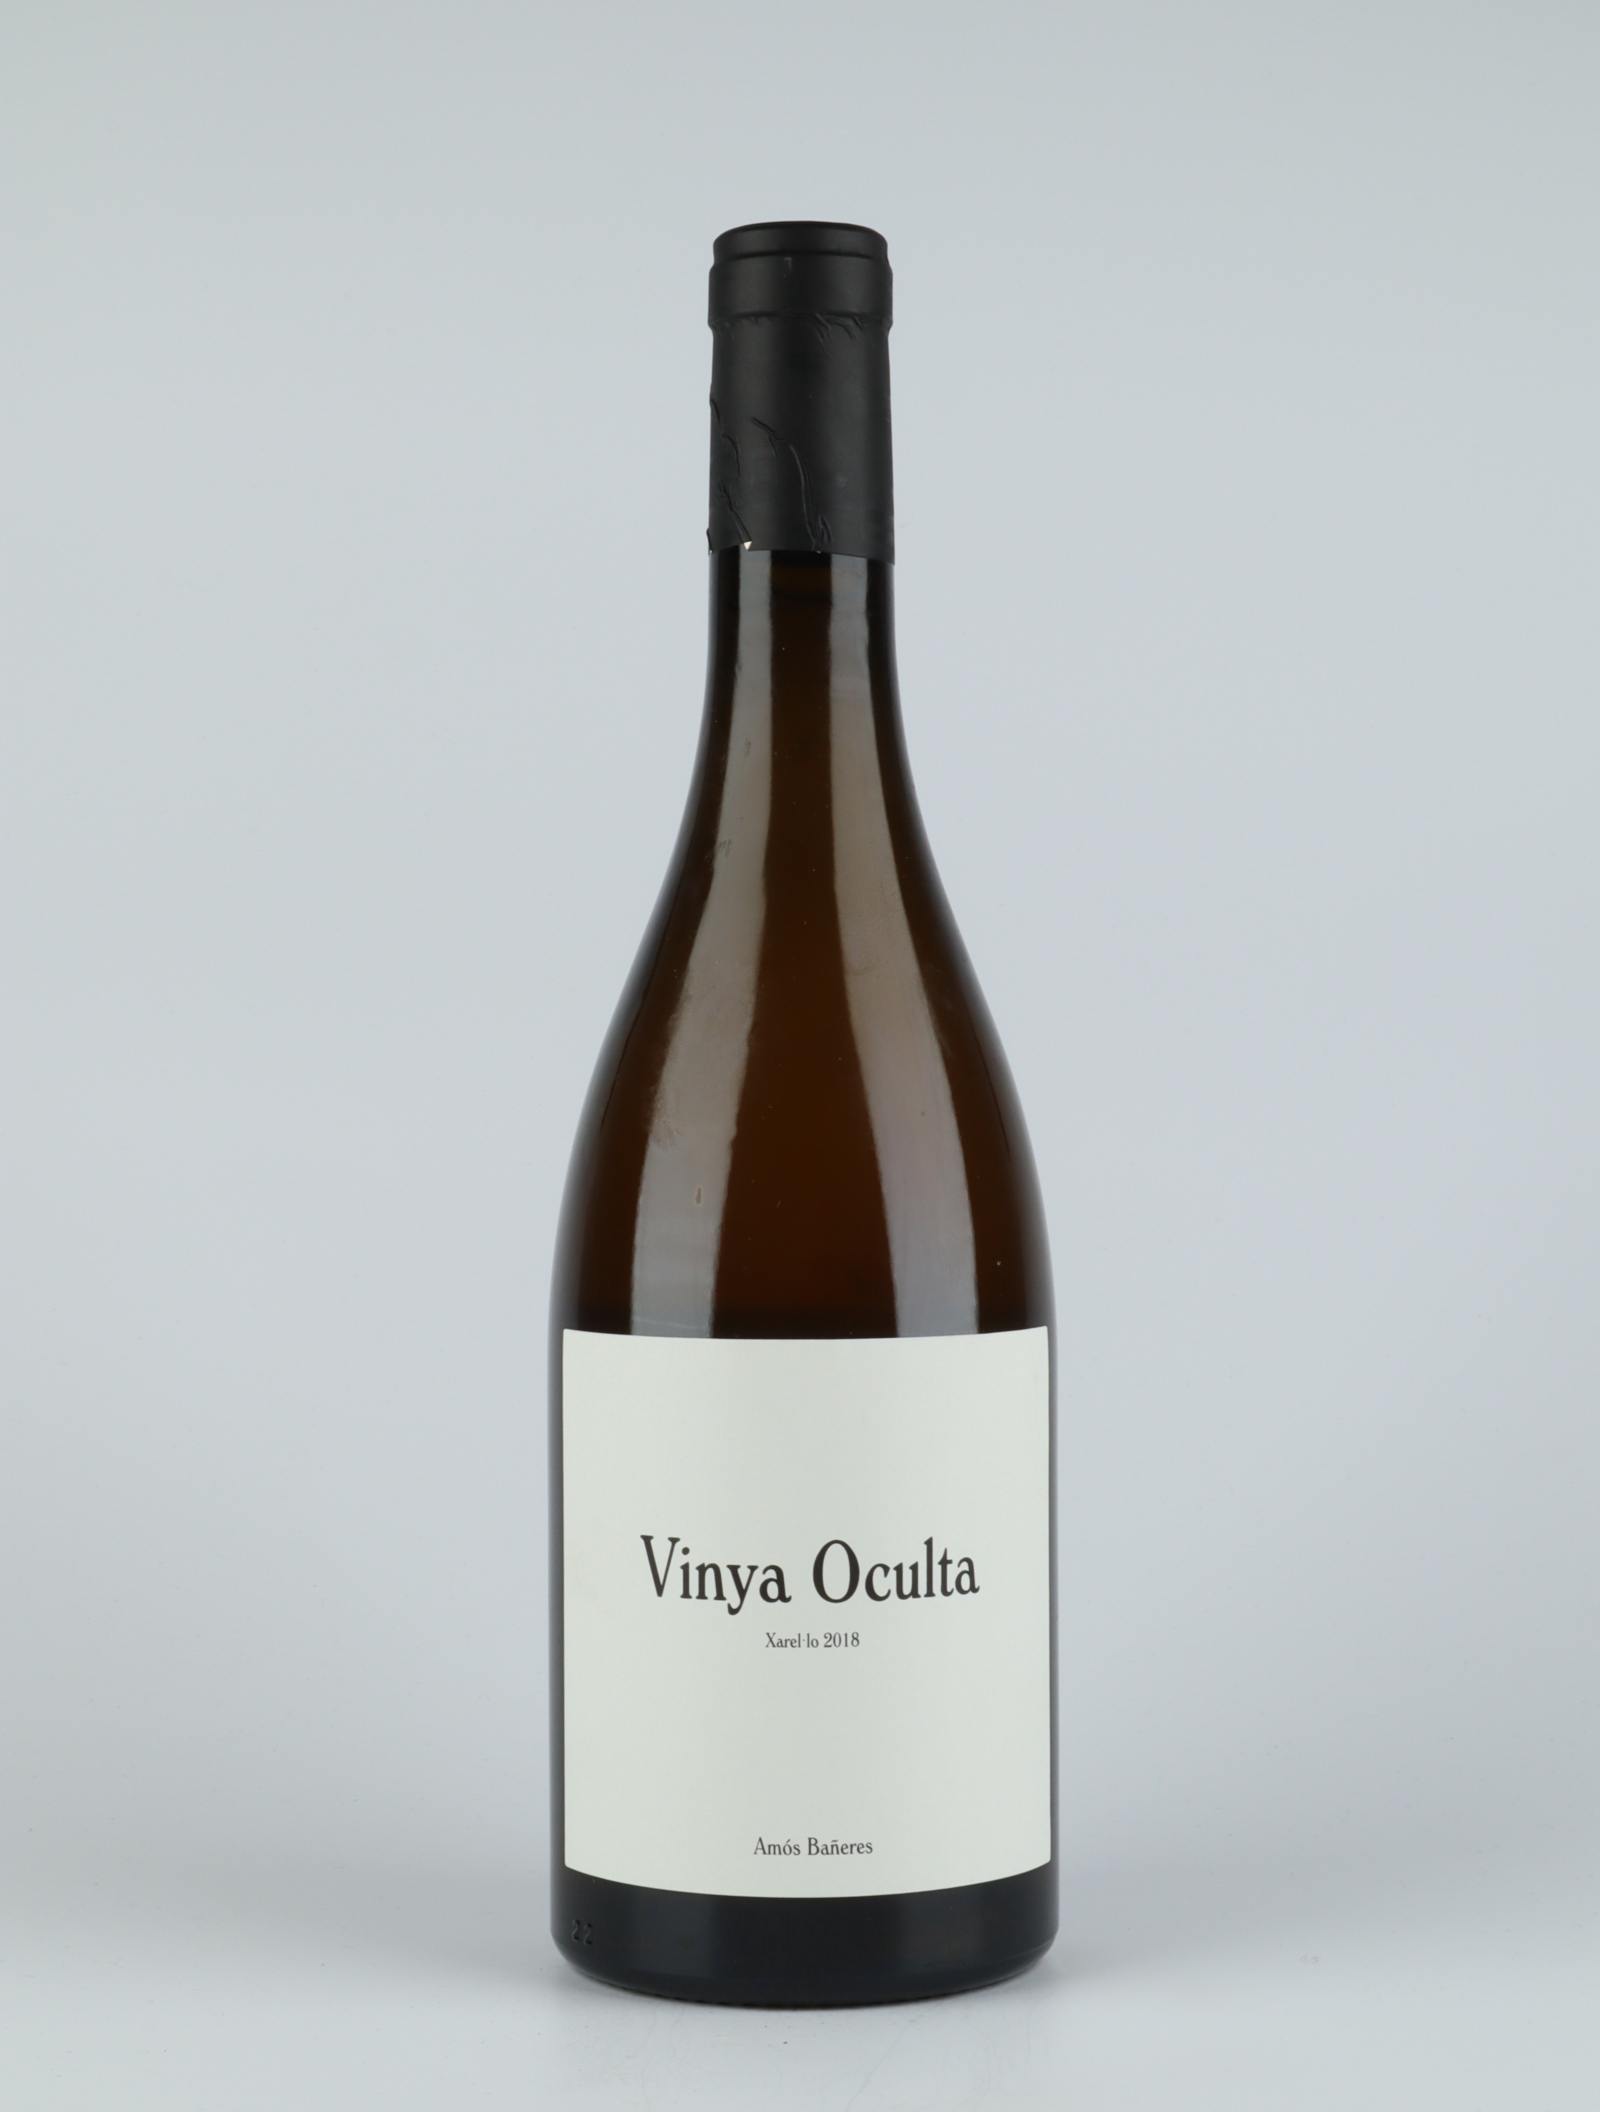 En flaske 2018 Vinya Oculta Hvidvin fra Amós Bañeres, Penedès i Spanien